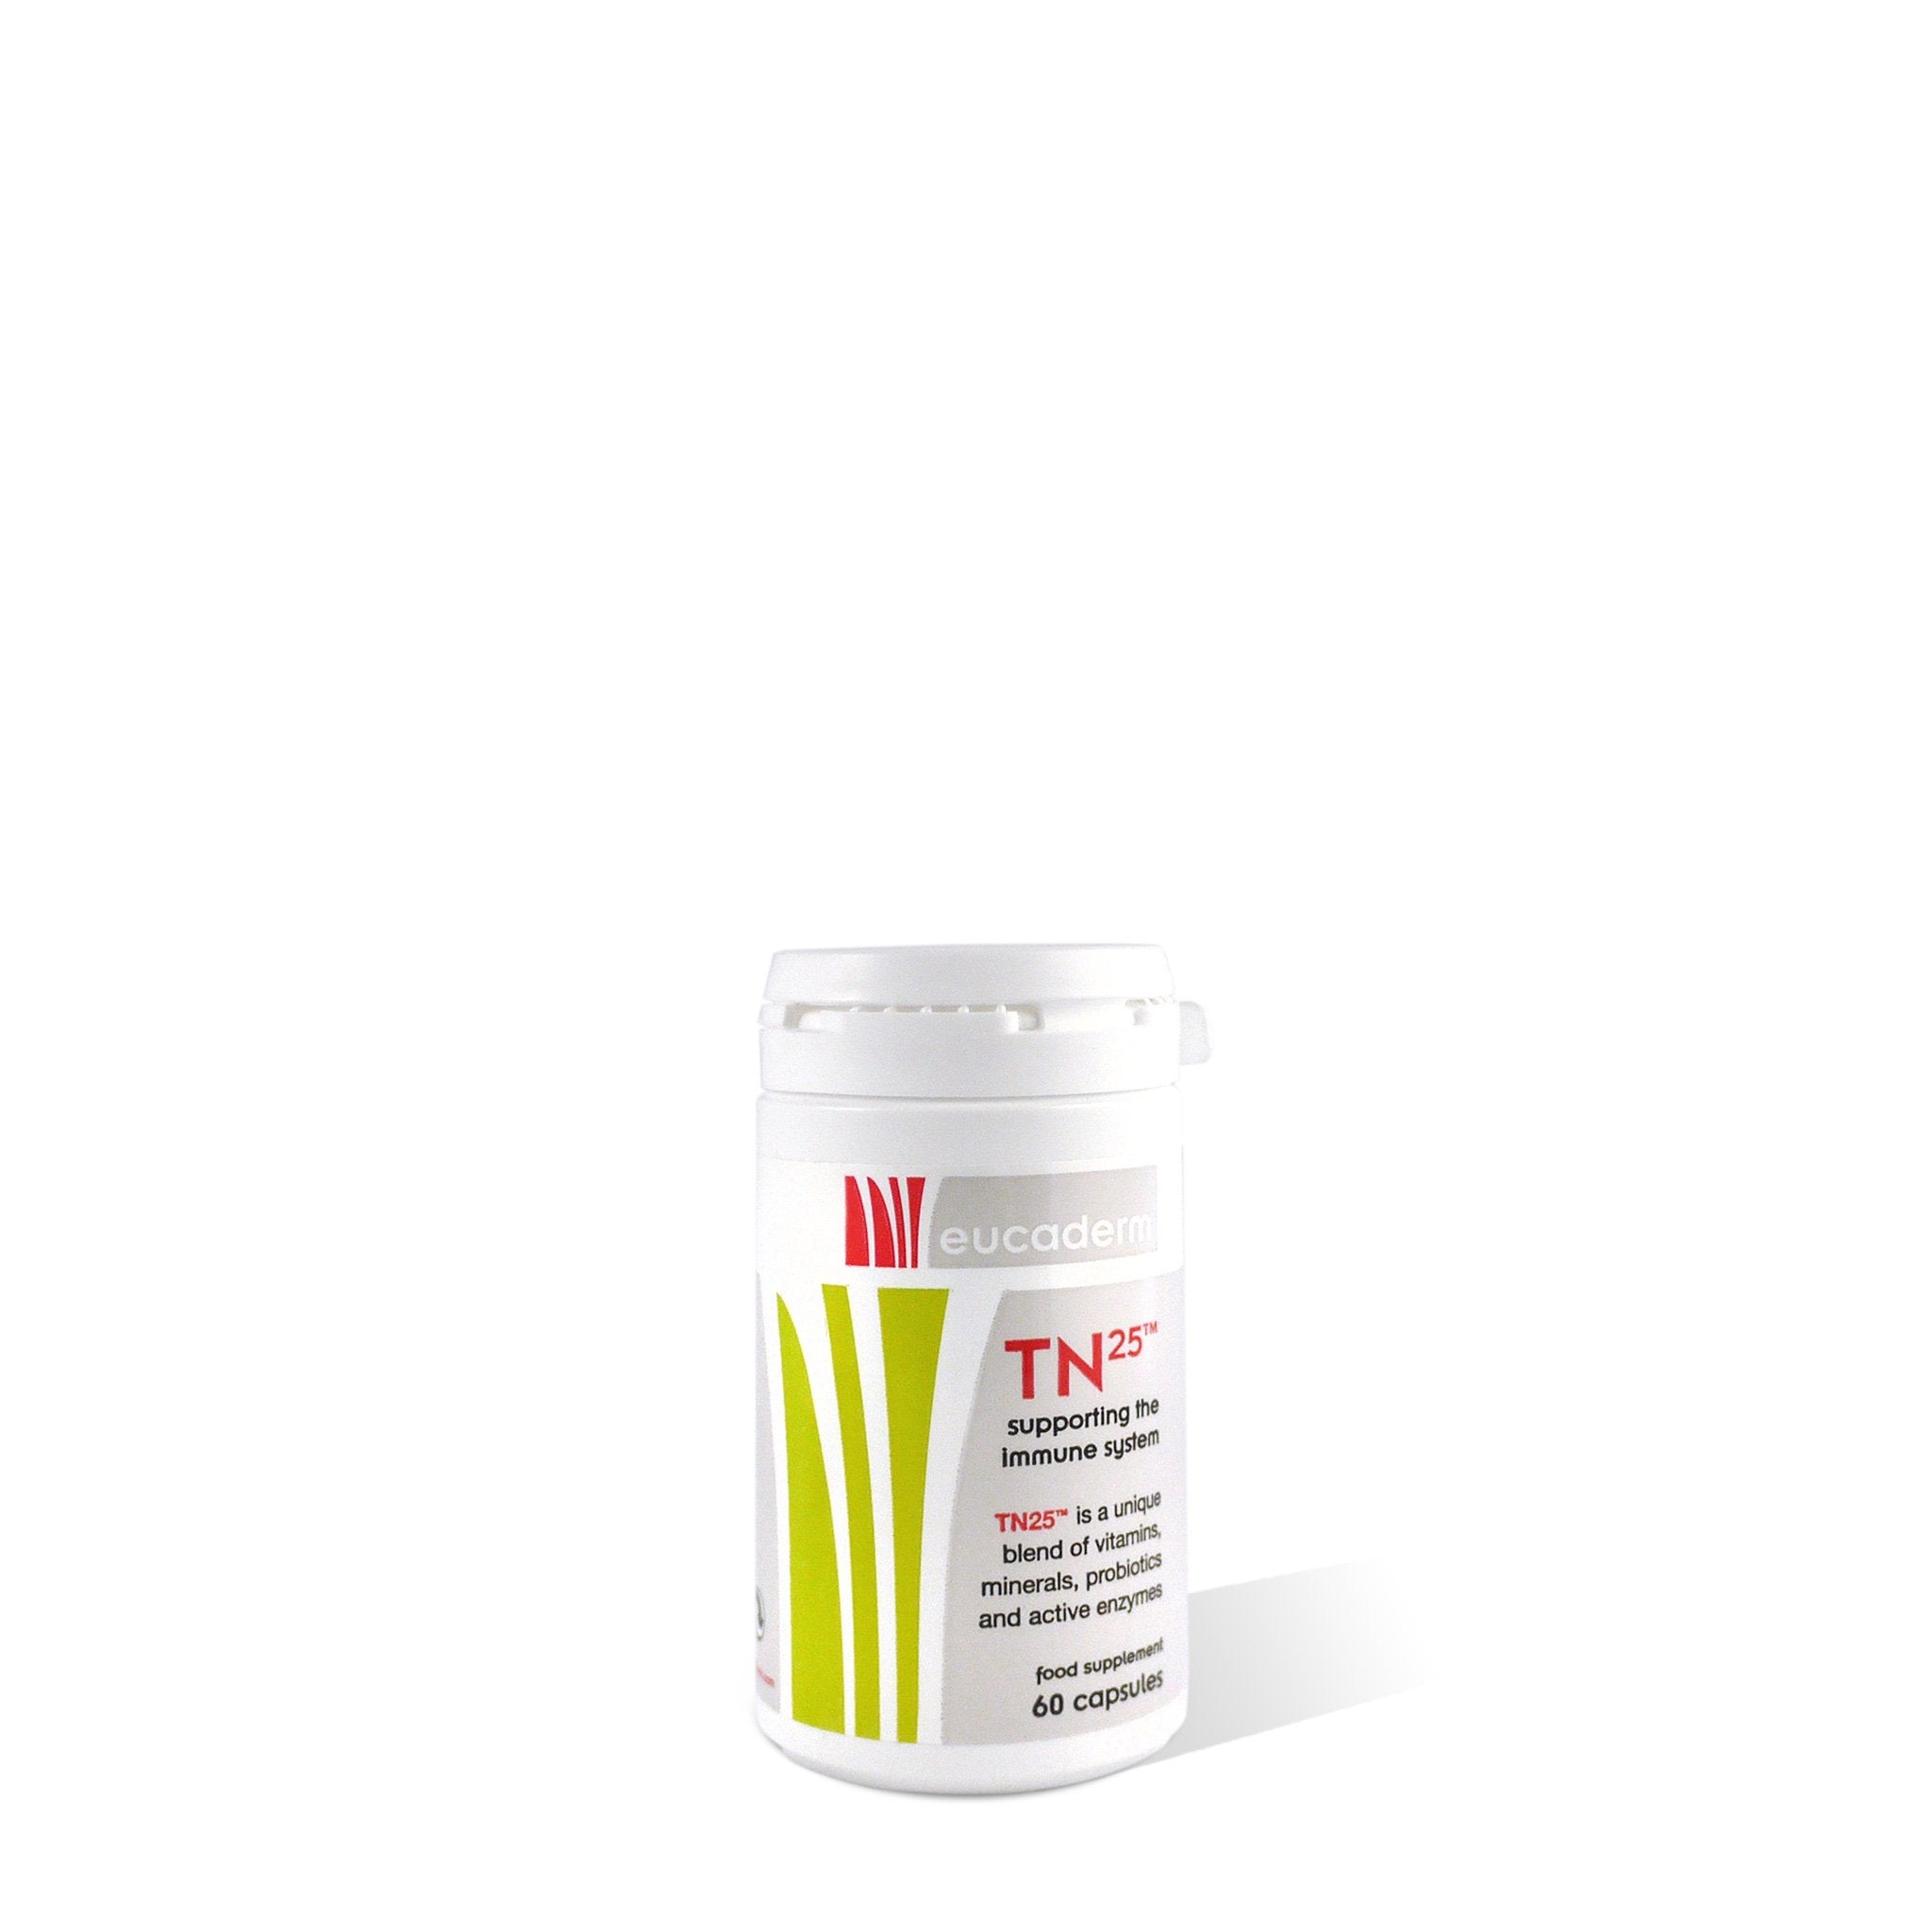 Eucaderm TN25 Live Enzymes & Vitamins (60 capsules)